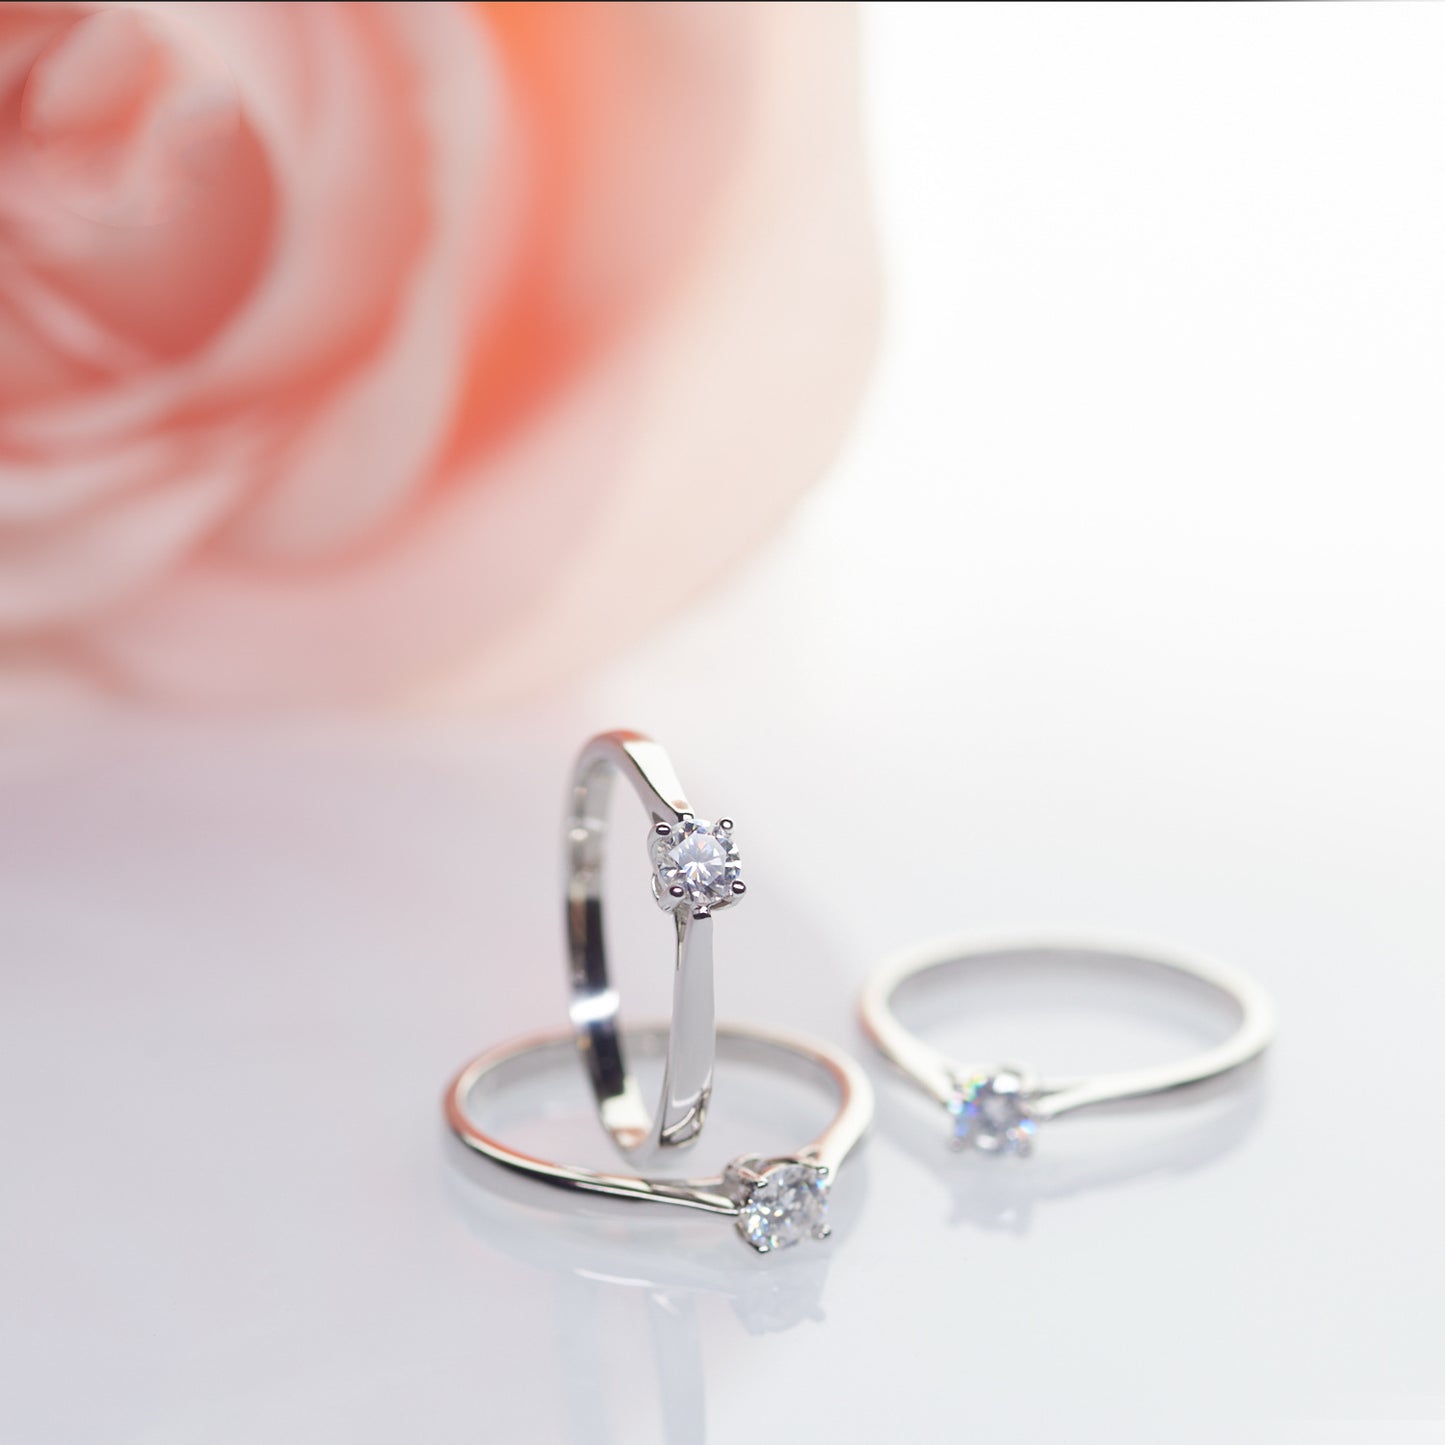 Simply Elegant 925 Sterling Silver Moissanite Engagement Ring